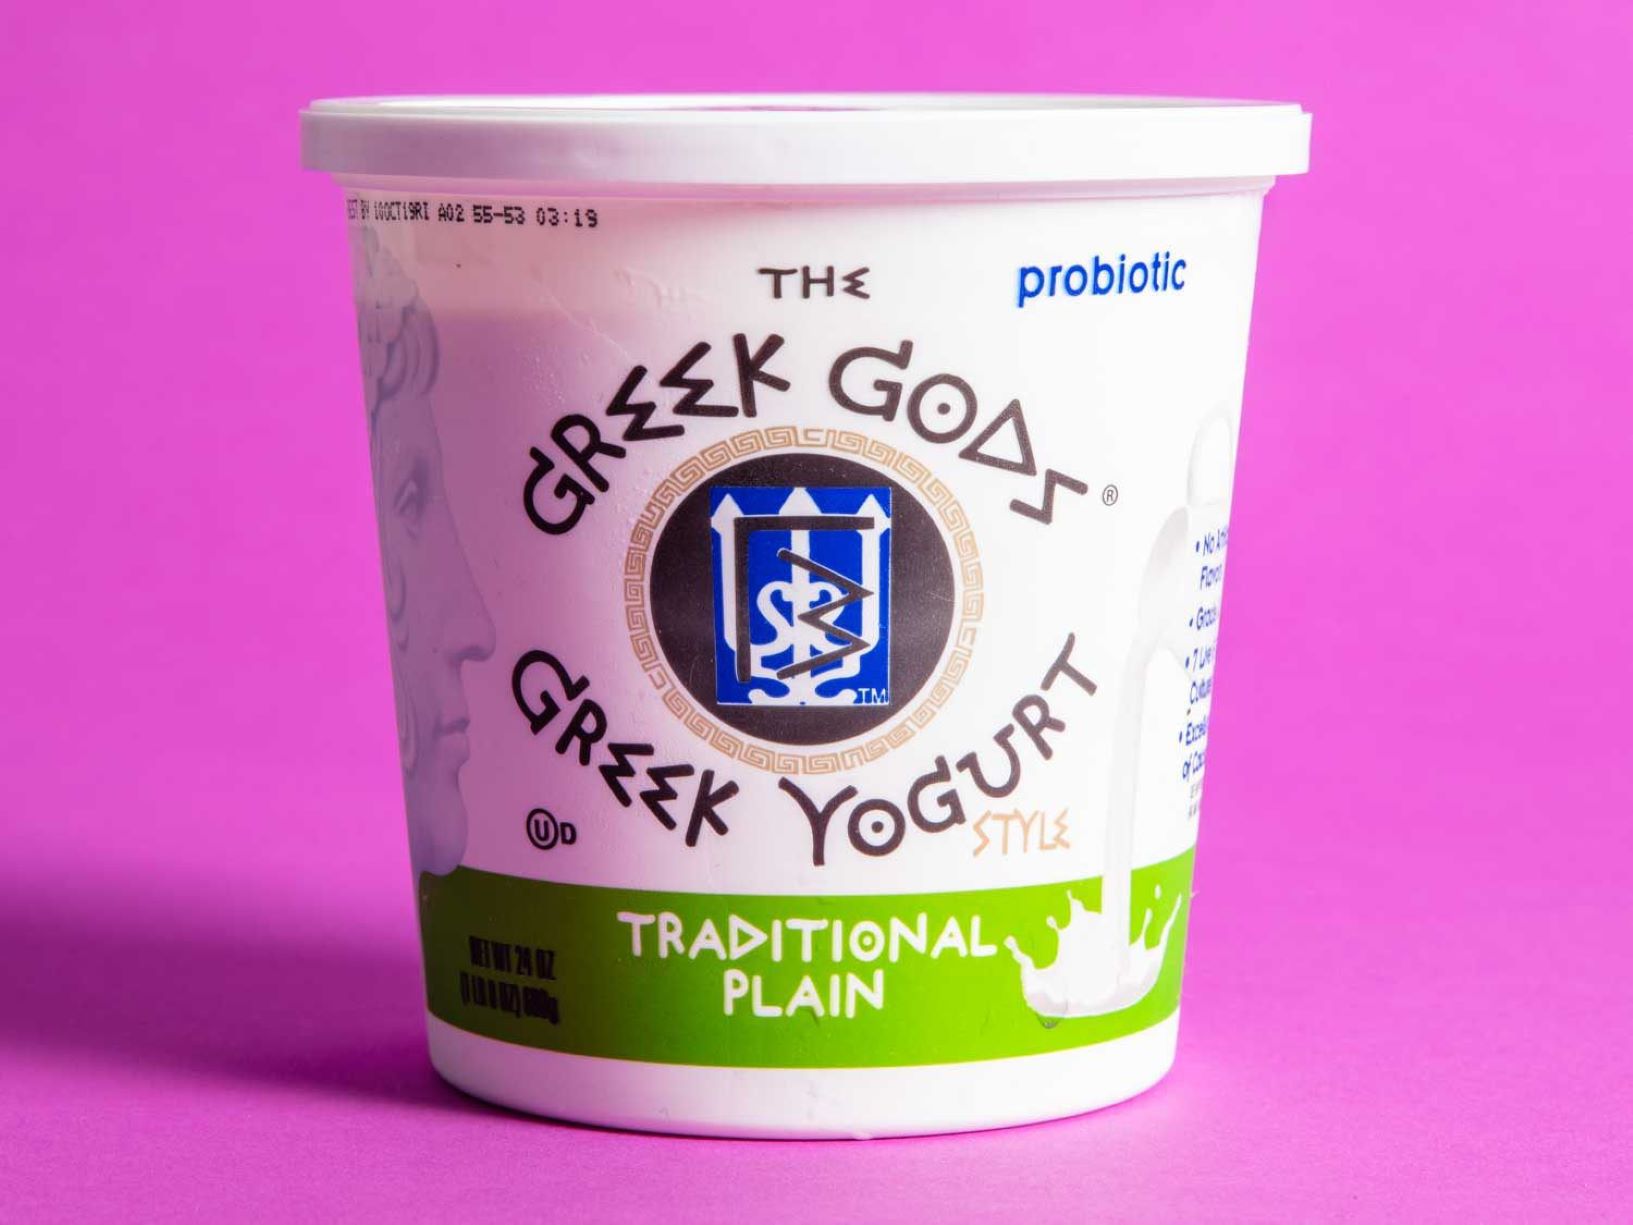 18-greek-gods-greek-yogurt-nutrition-facts